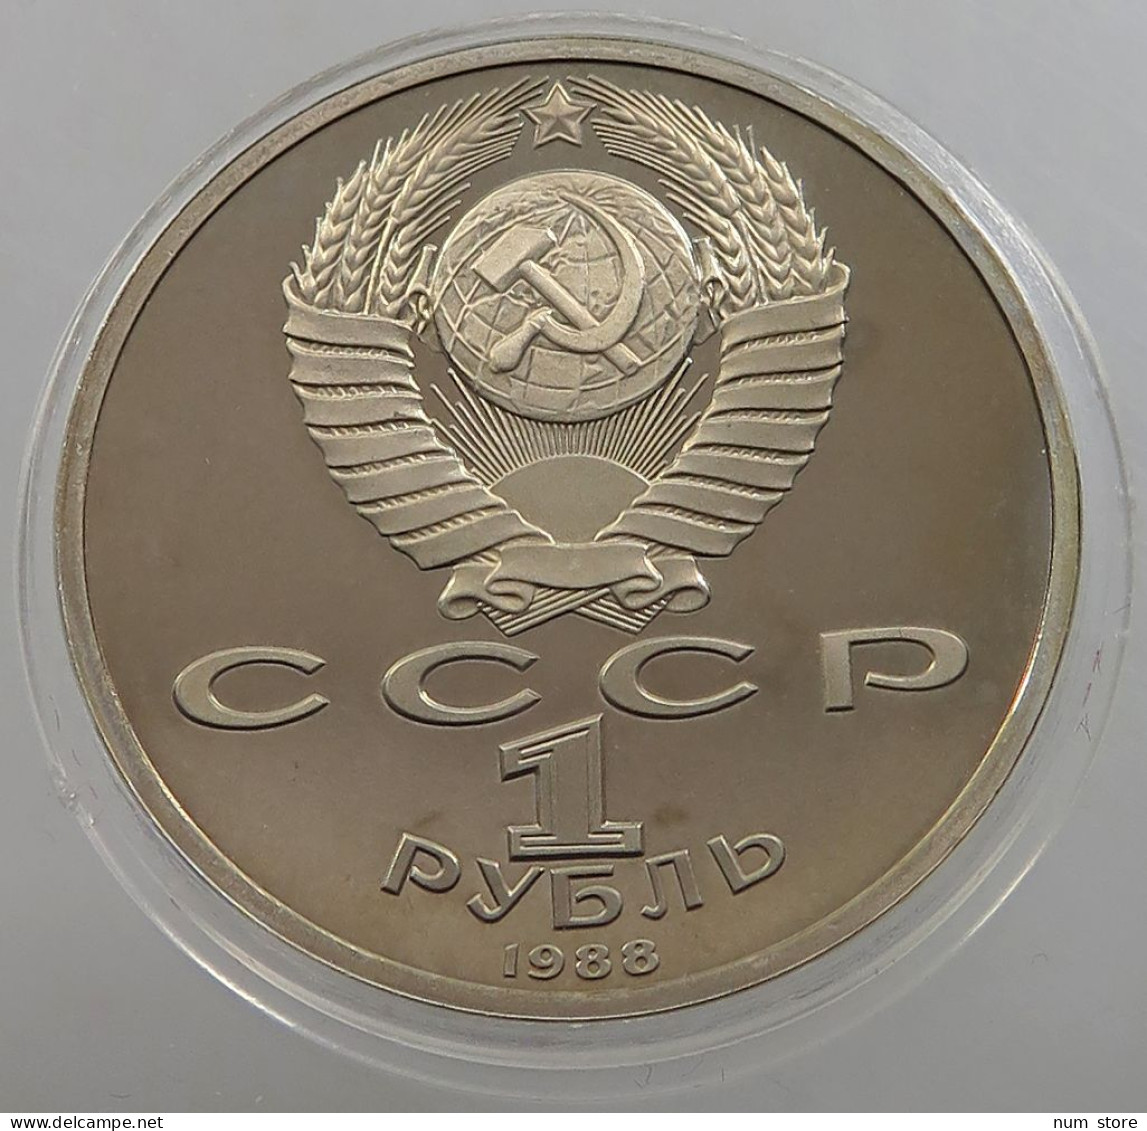 RUSSIA USSR 1 ROUBLE 1988 GORKI PROOF #sm14 0533 - Russia